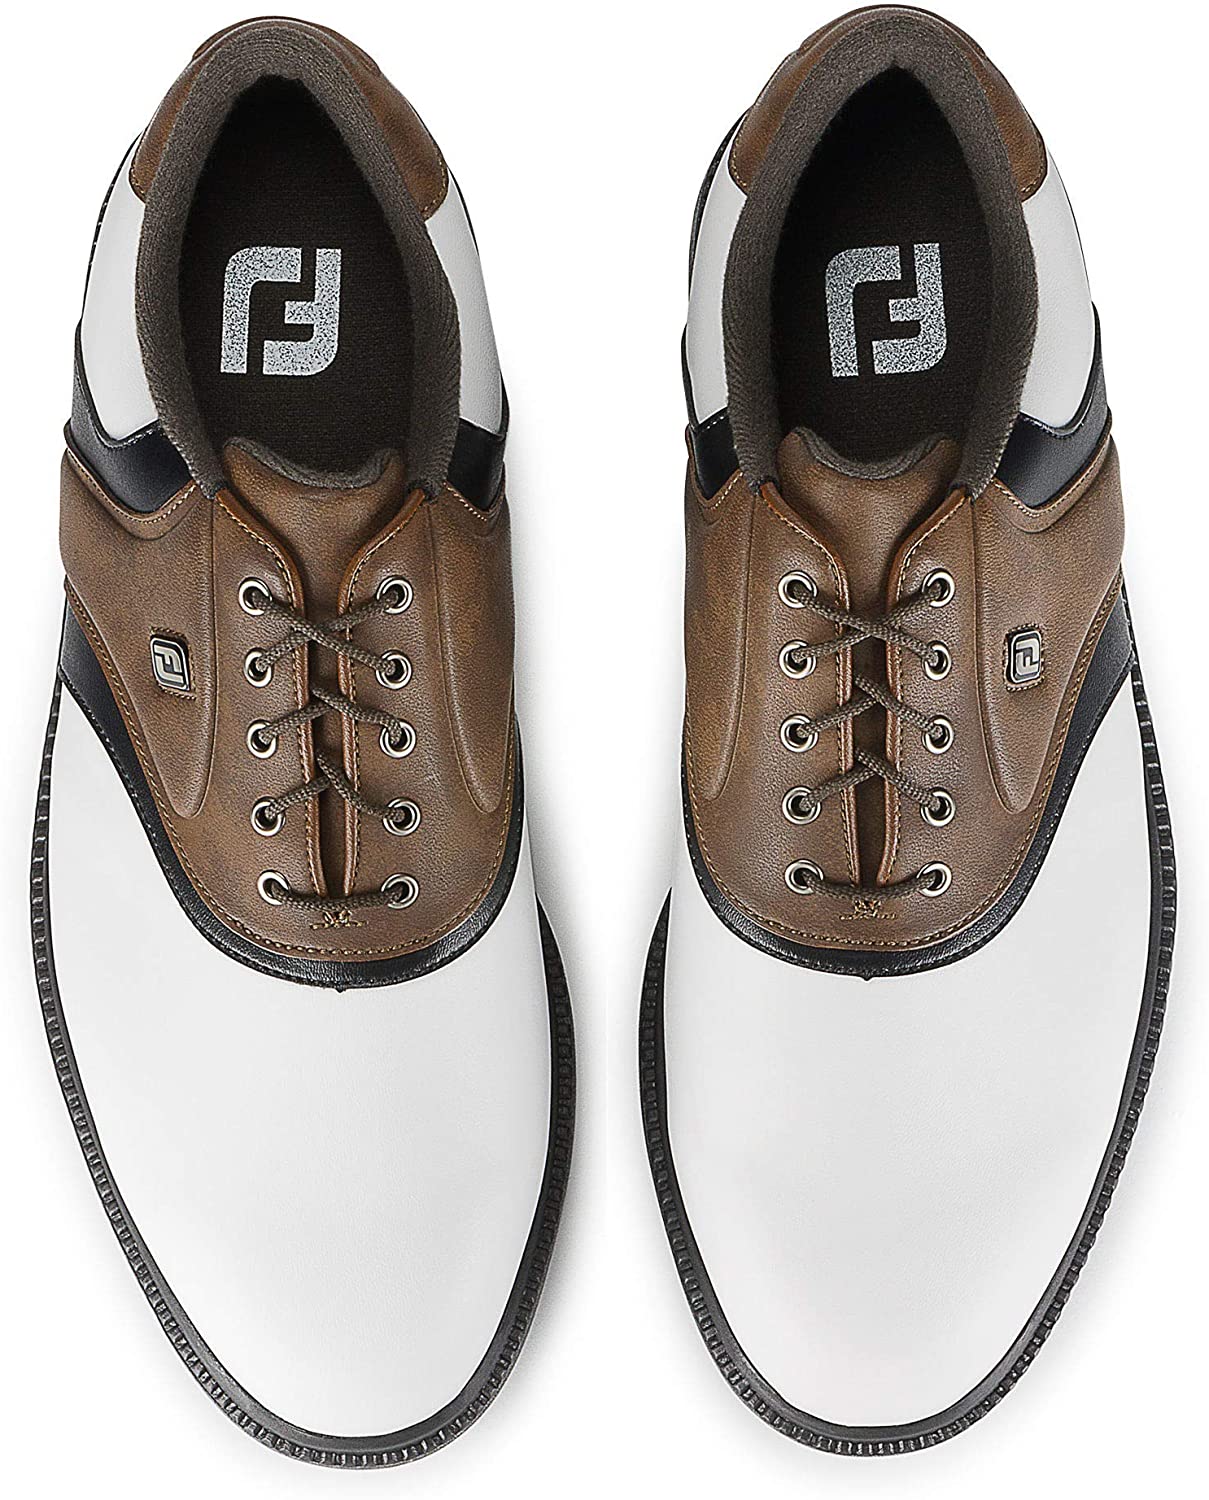 FootJoy FJ Originals Golf Shoes (White/Brown, 10) - image 3 of 7